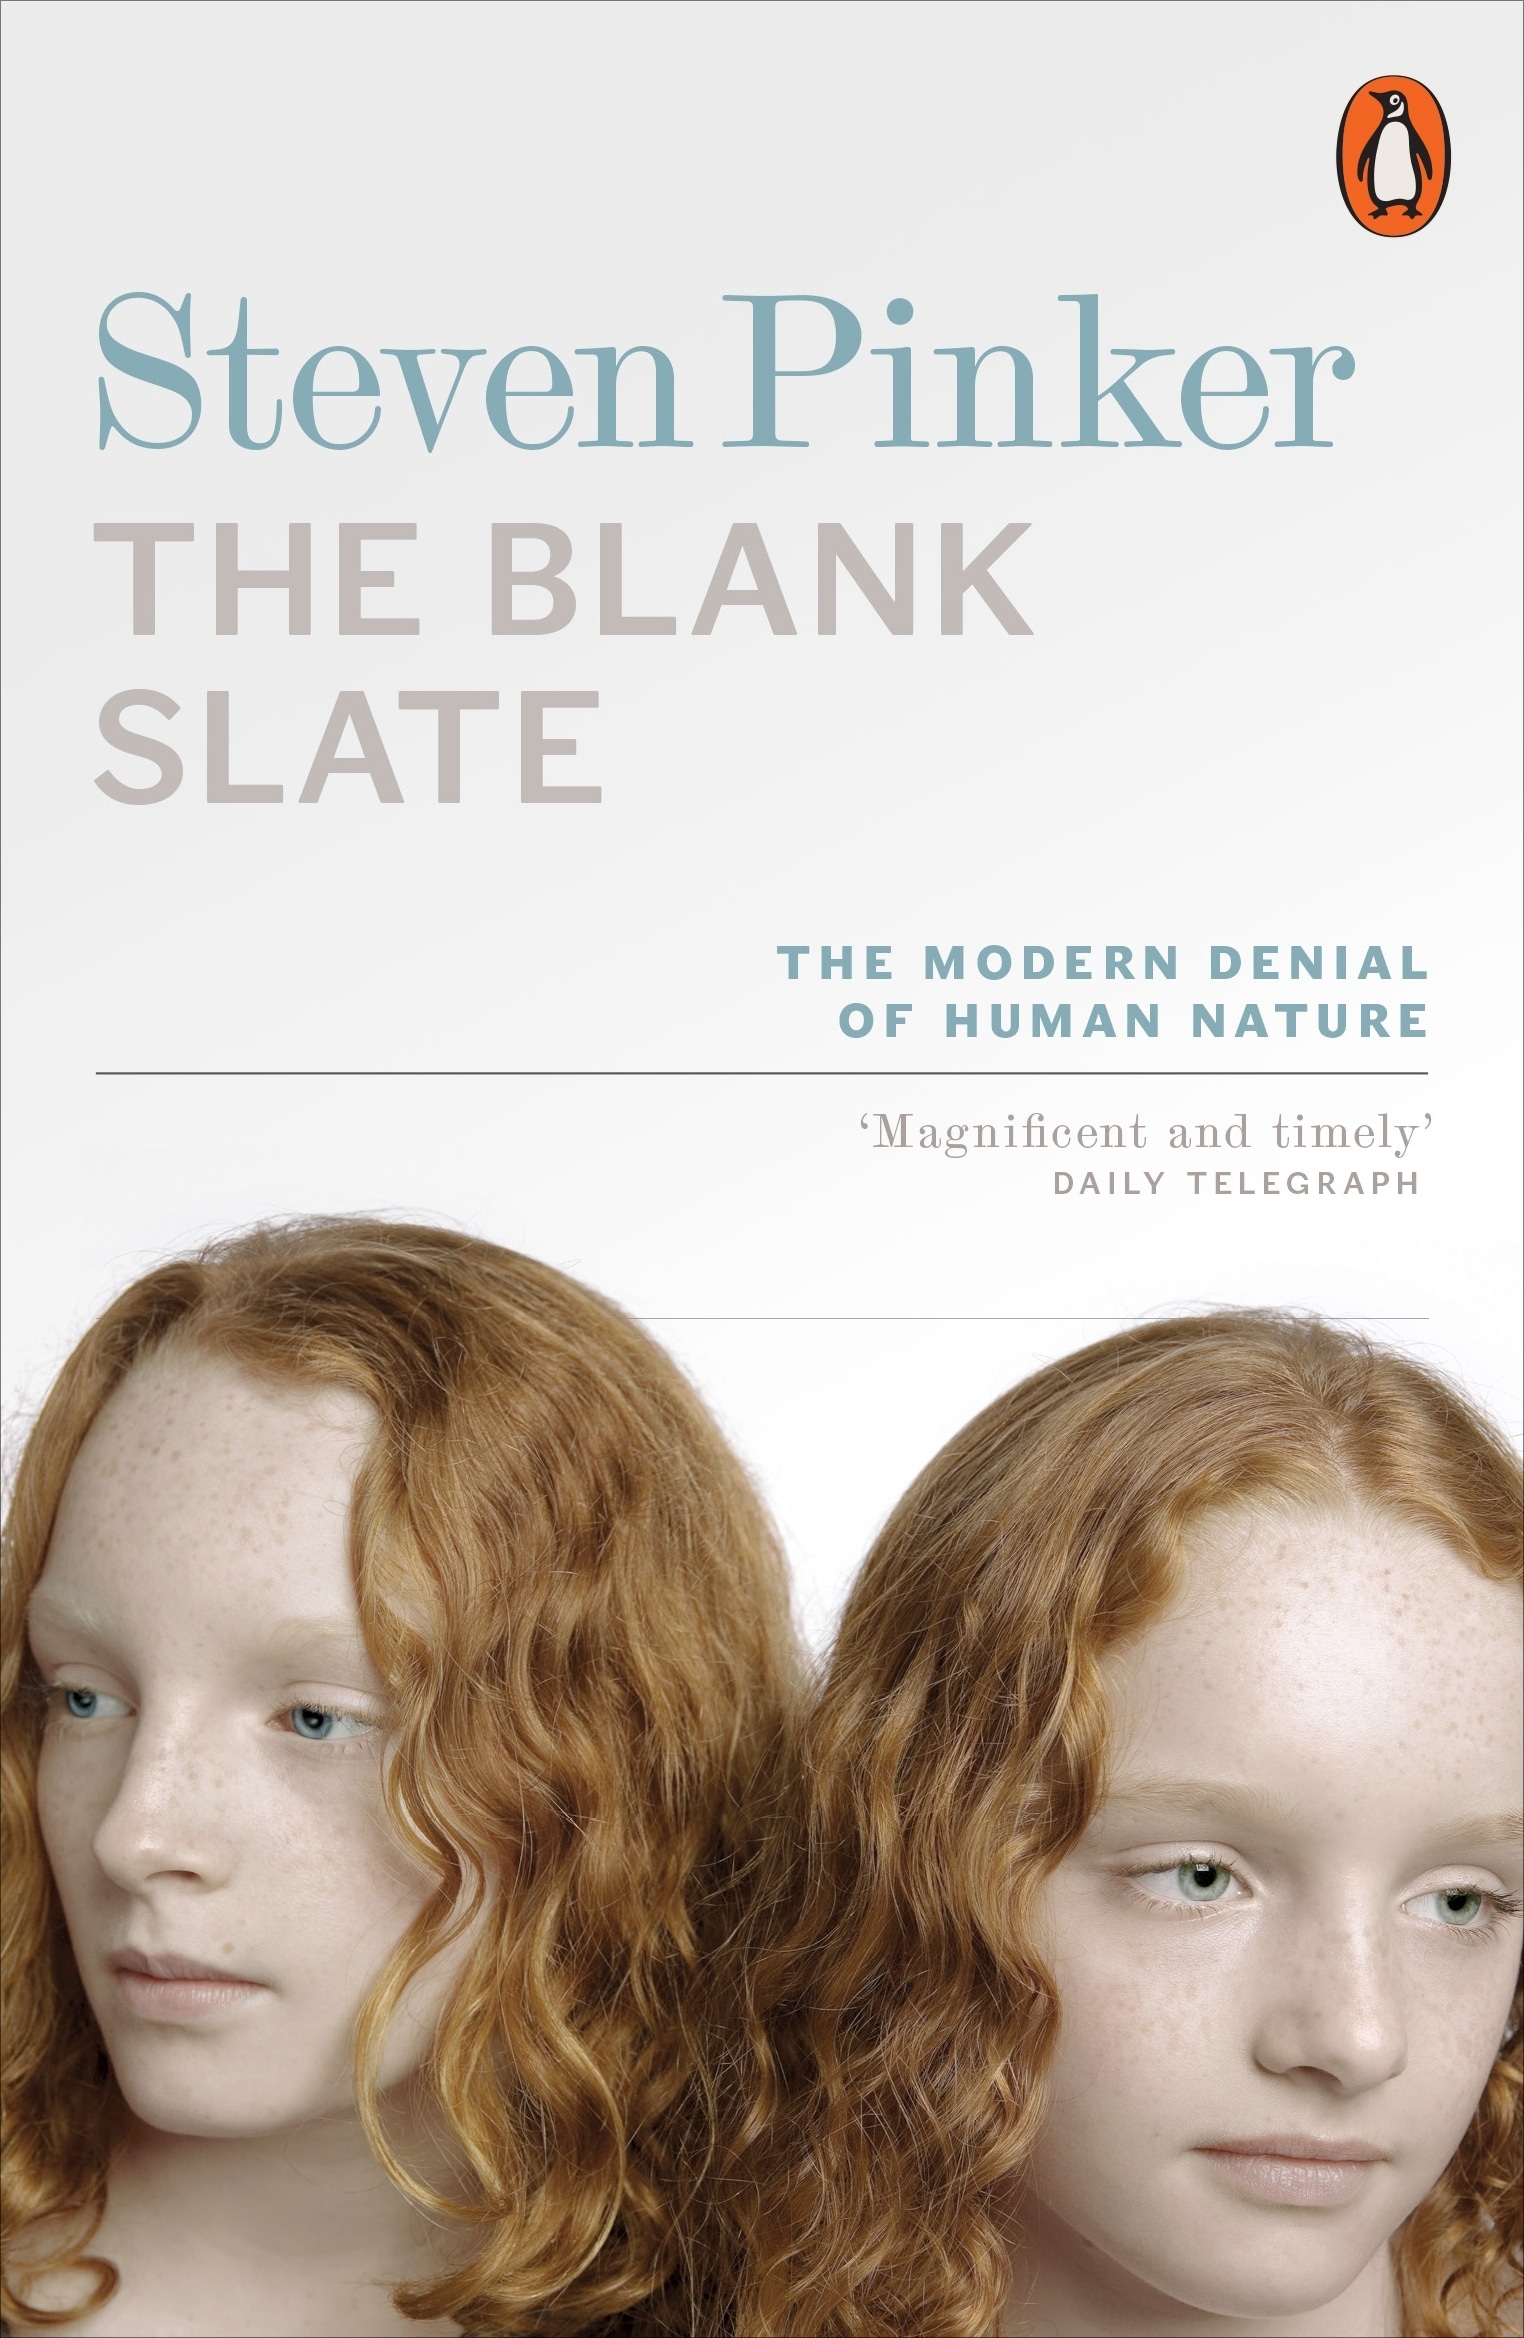 Book “The Blank Slate” by Steven Pinker — June 5, 2003